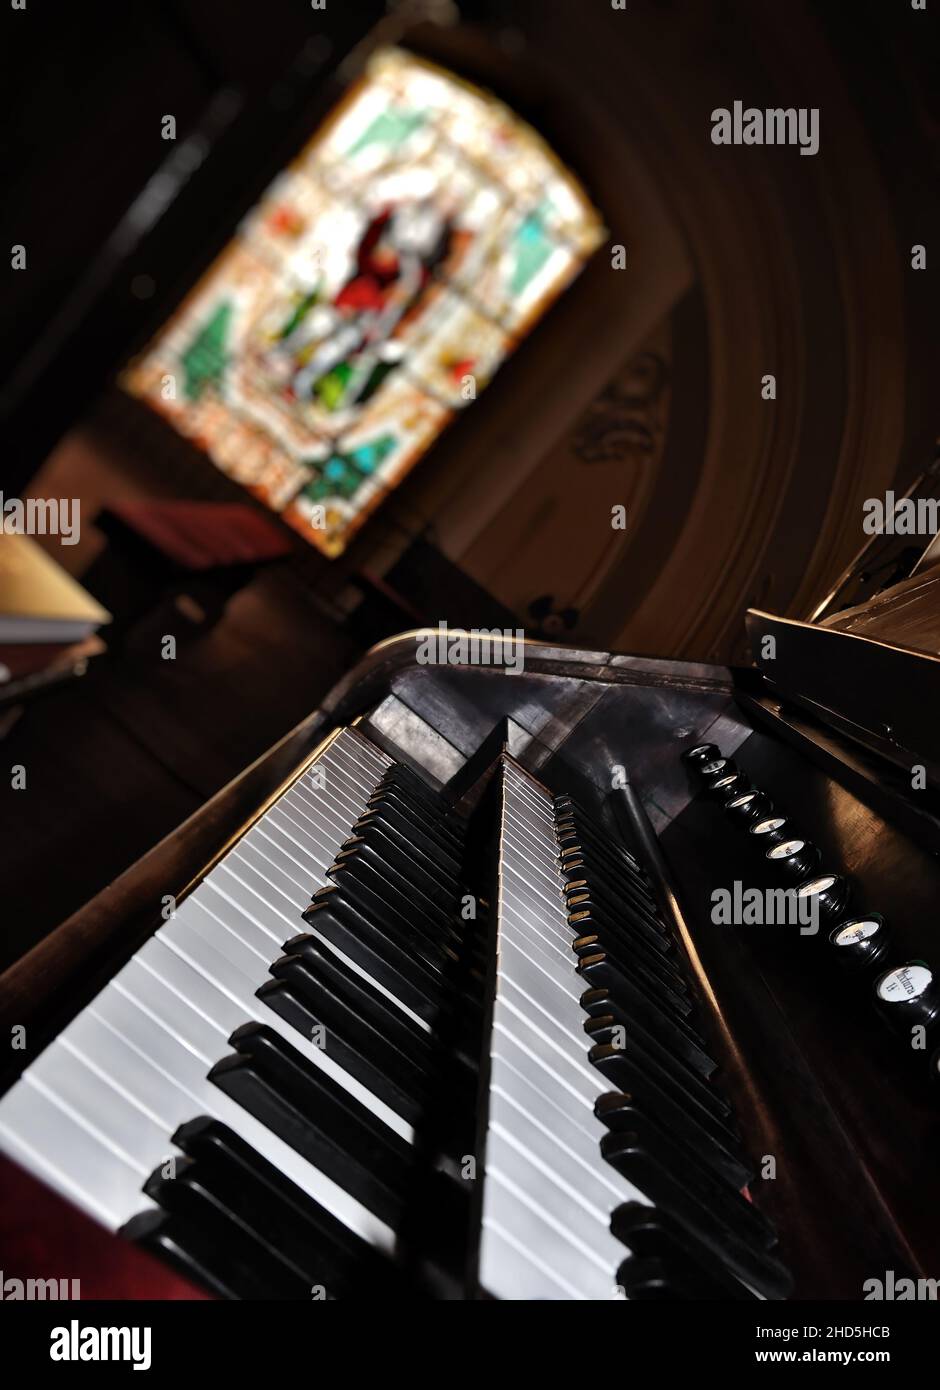 An old pipe organ keyboard in a church Stock Photo